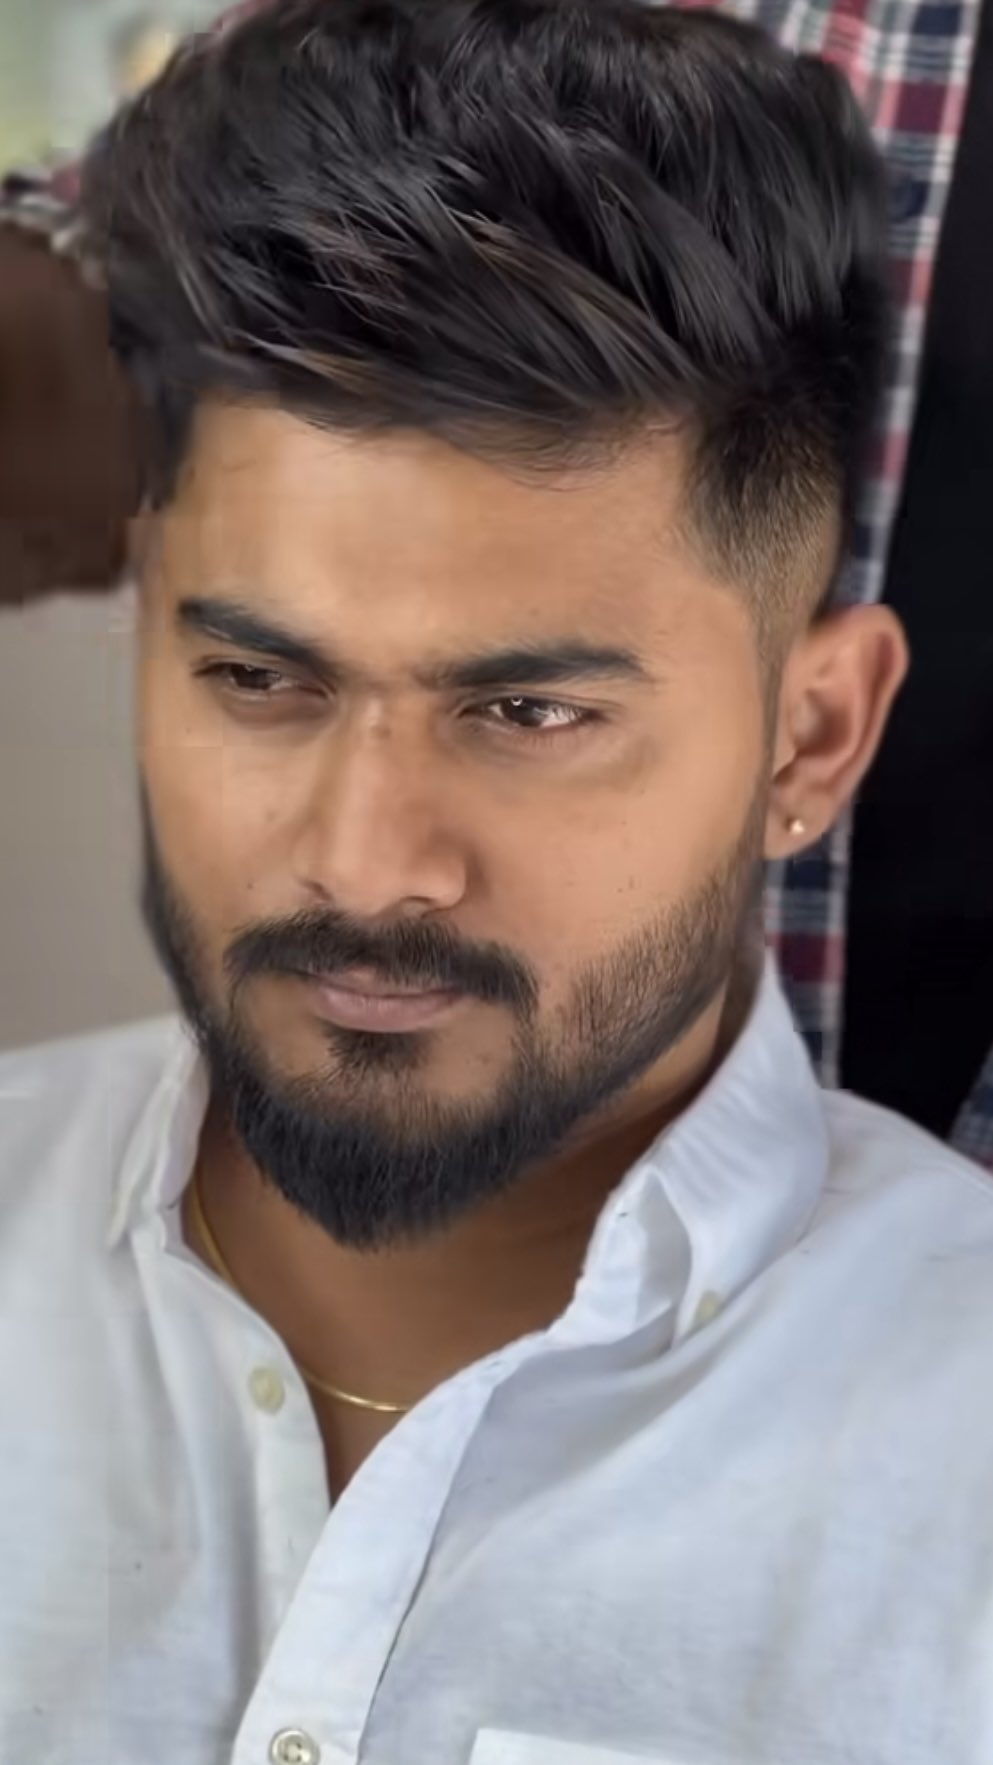 Tamil Actor Suriya | Surya actor, Indian hairstyles, Wedding men